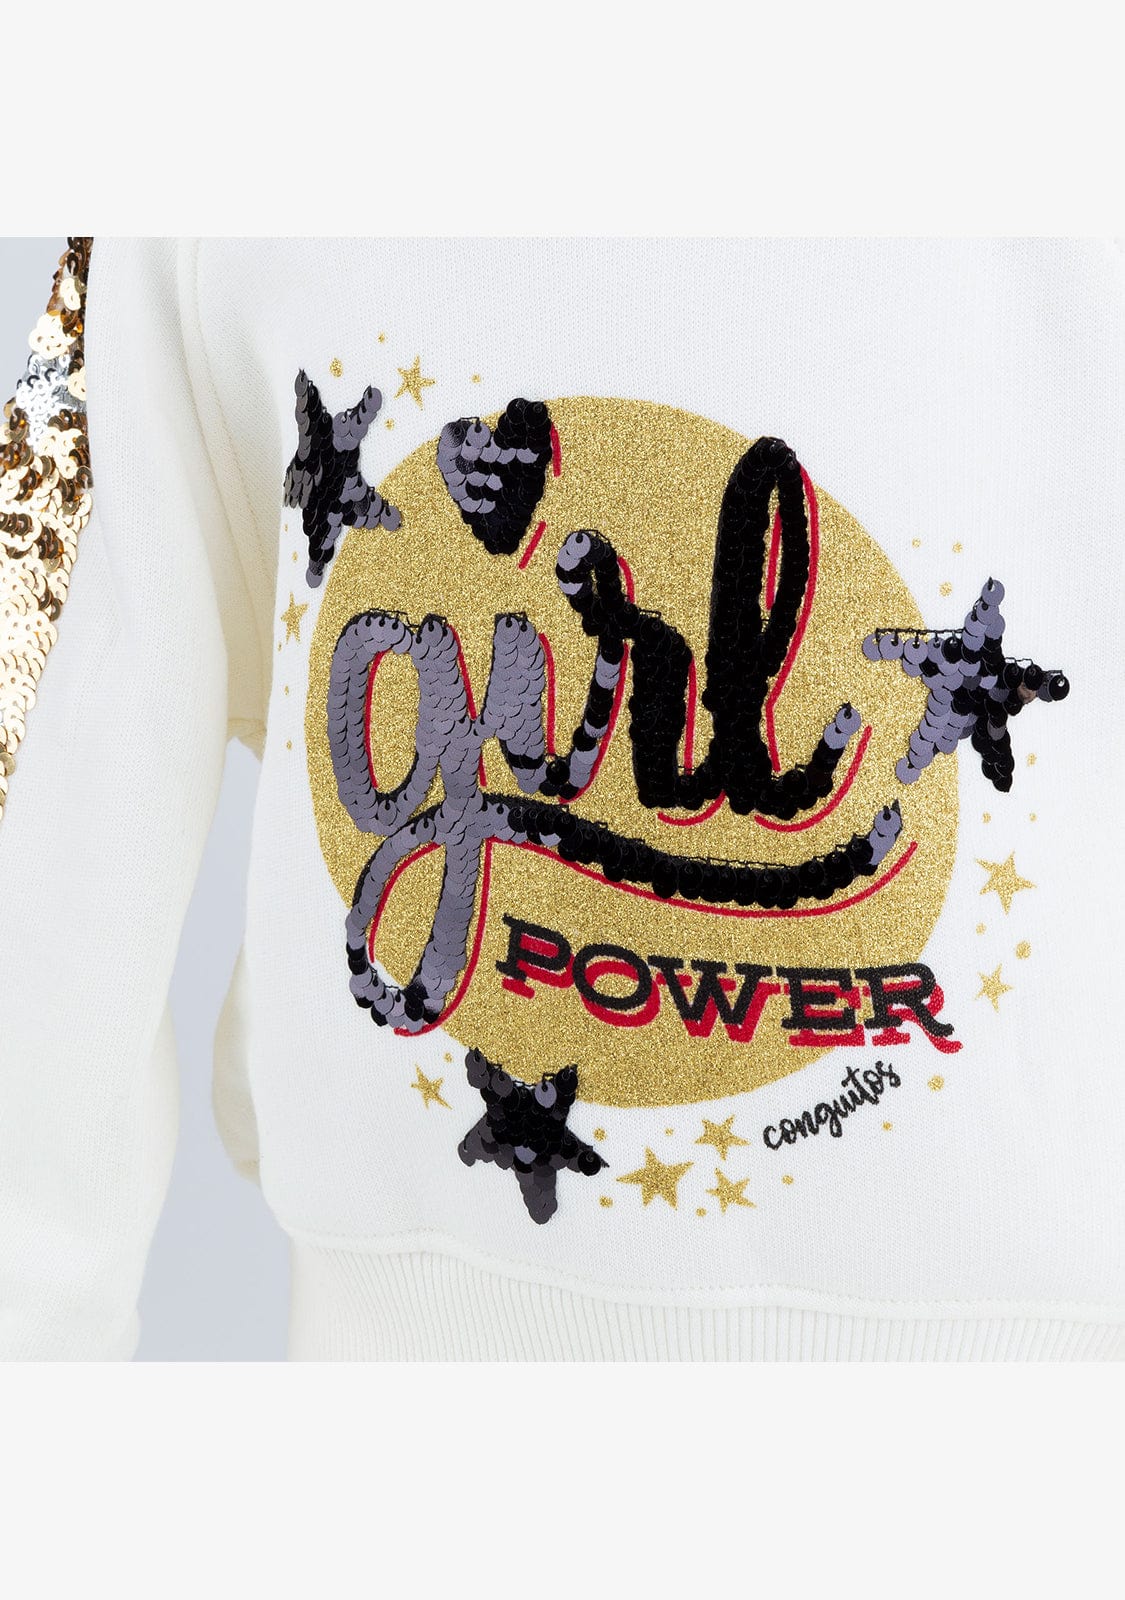 CONGUITOS TEXTIL Clothing Girl's Gold Sequins Sweatshirt